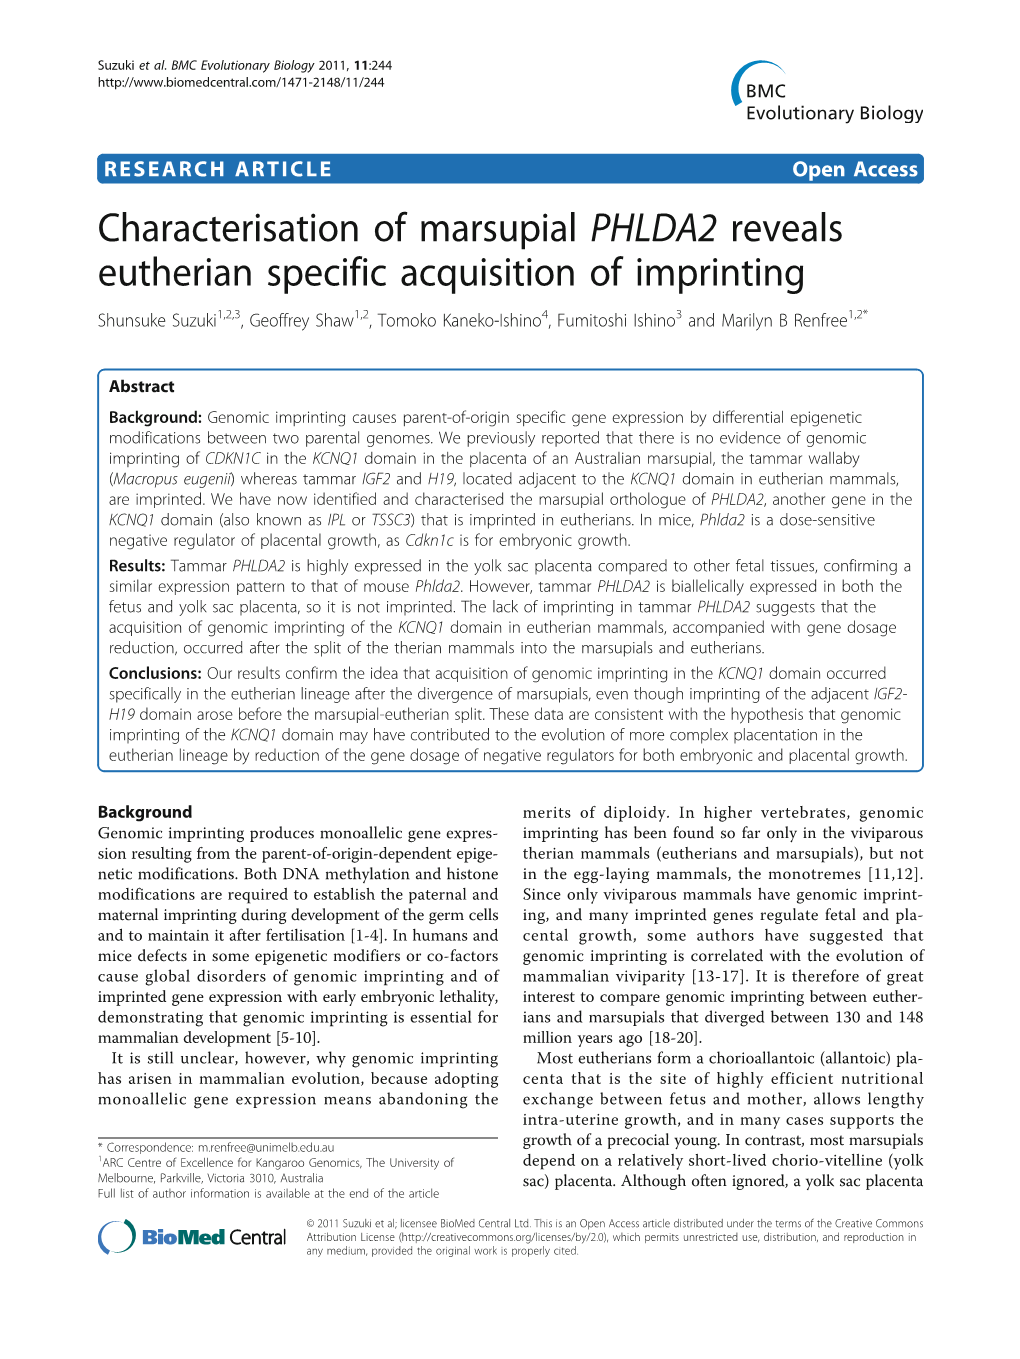 Characterisation of Marsupial PHLDA2 Reveals